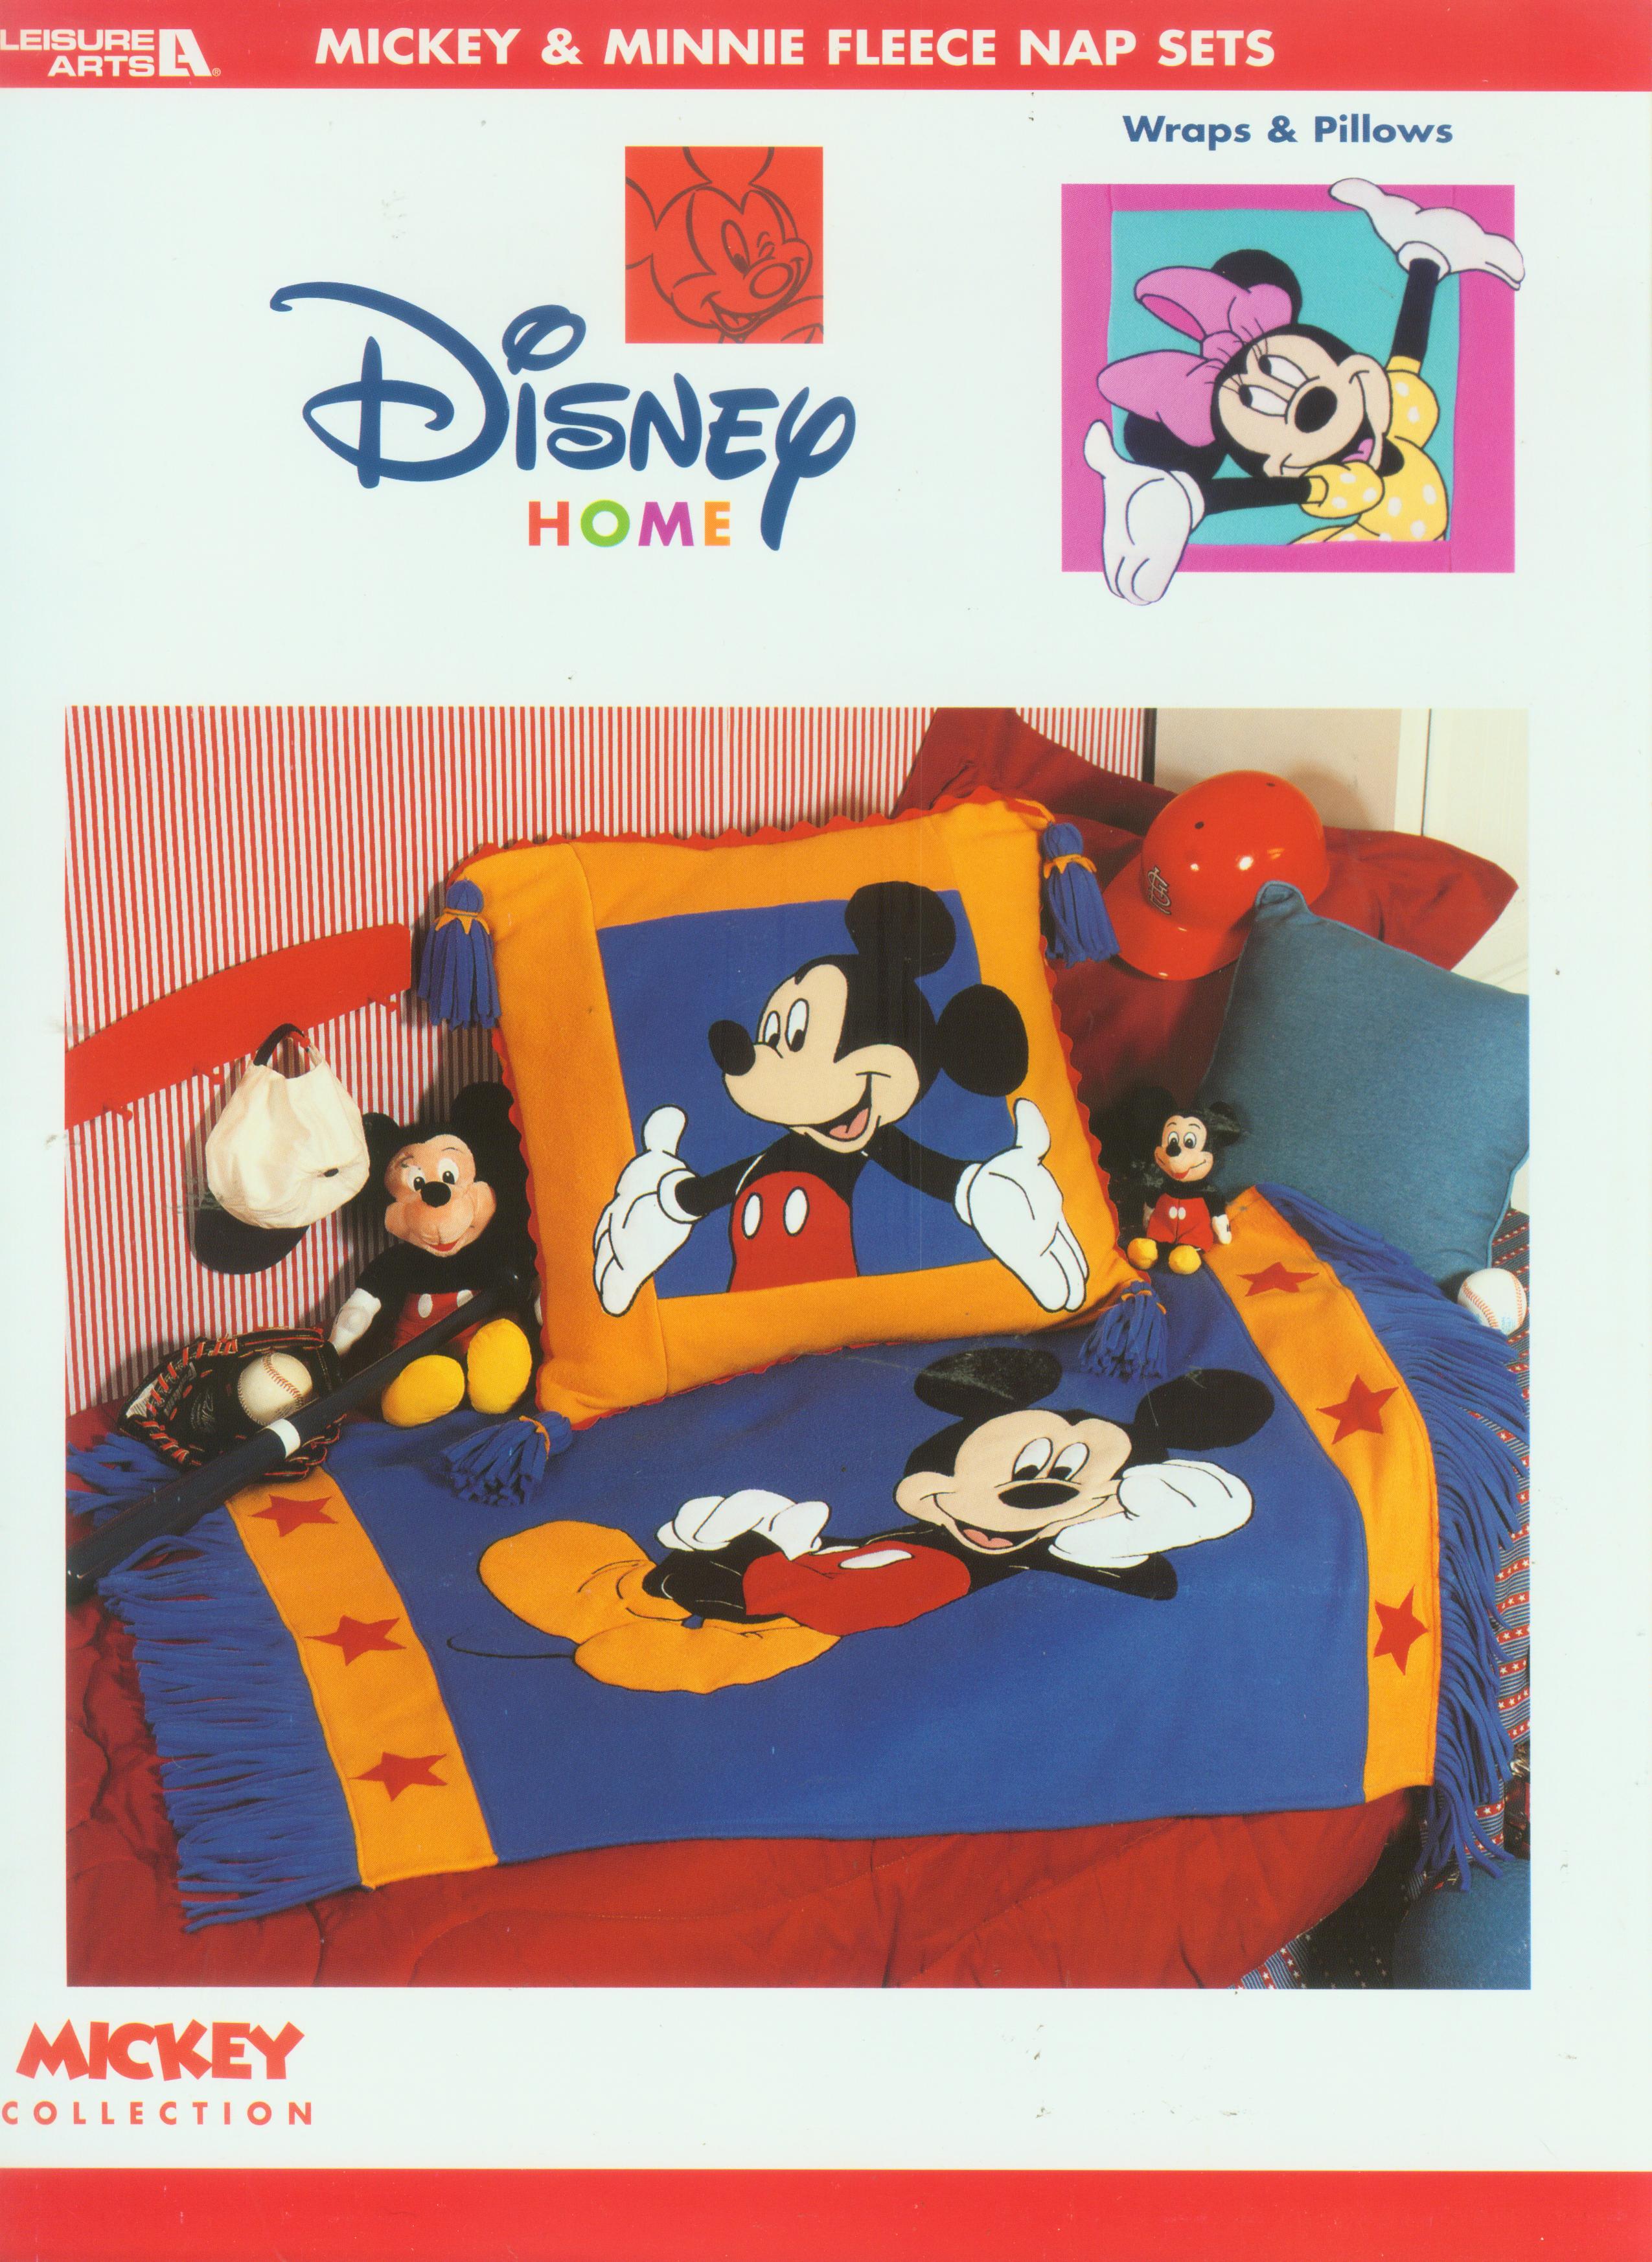 Mickey & Minnie Fleece Nap Sets